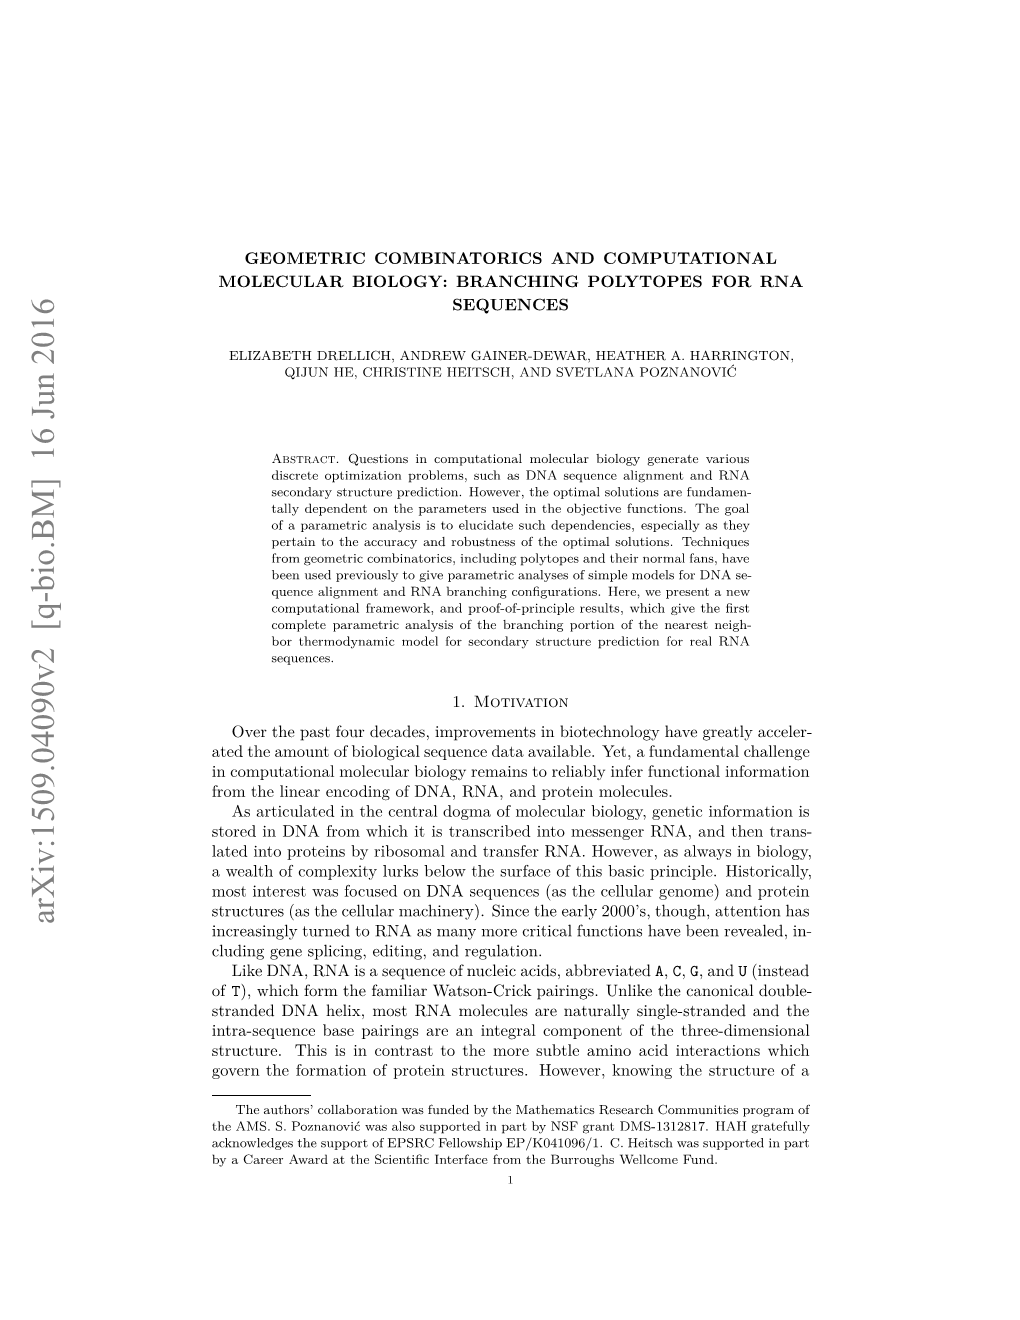 Geometric Combinatorics and Computational Molecular Biology